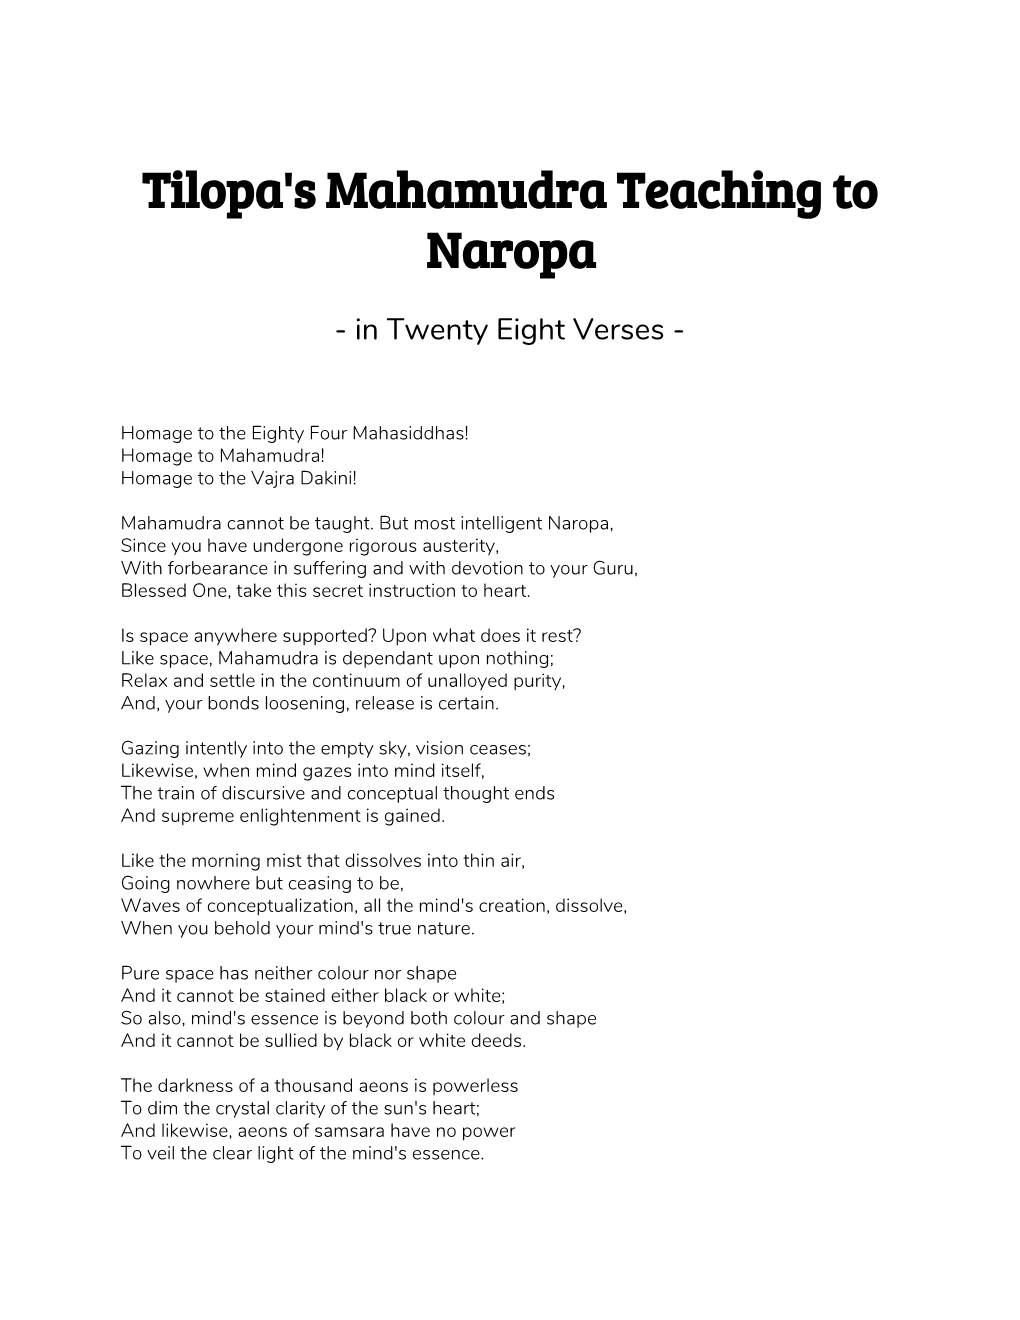 Tilopa's Mahamudra Teaching to Naropa